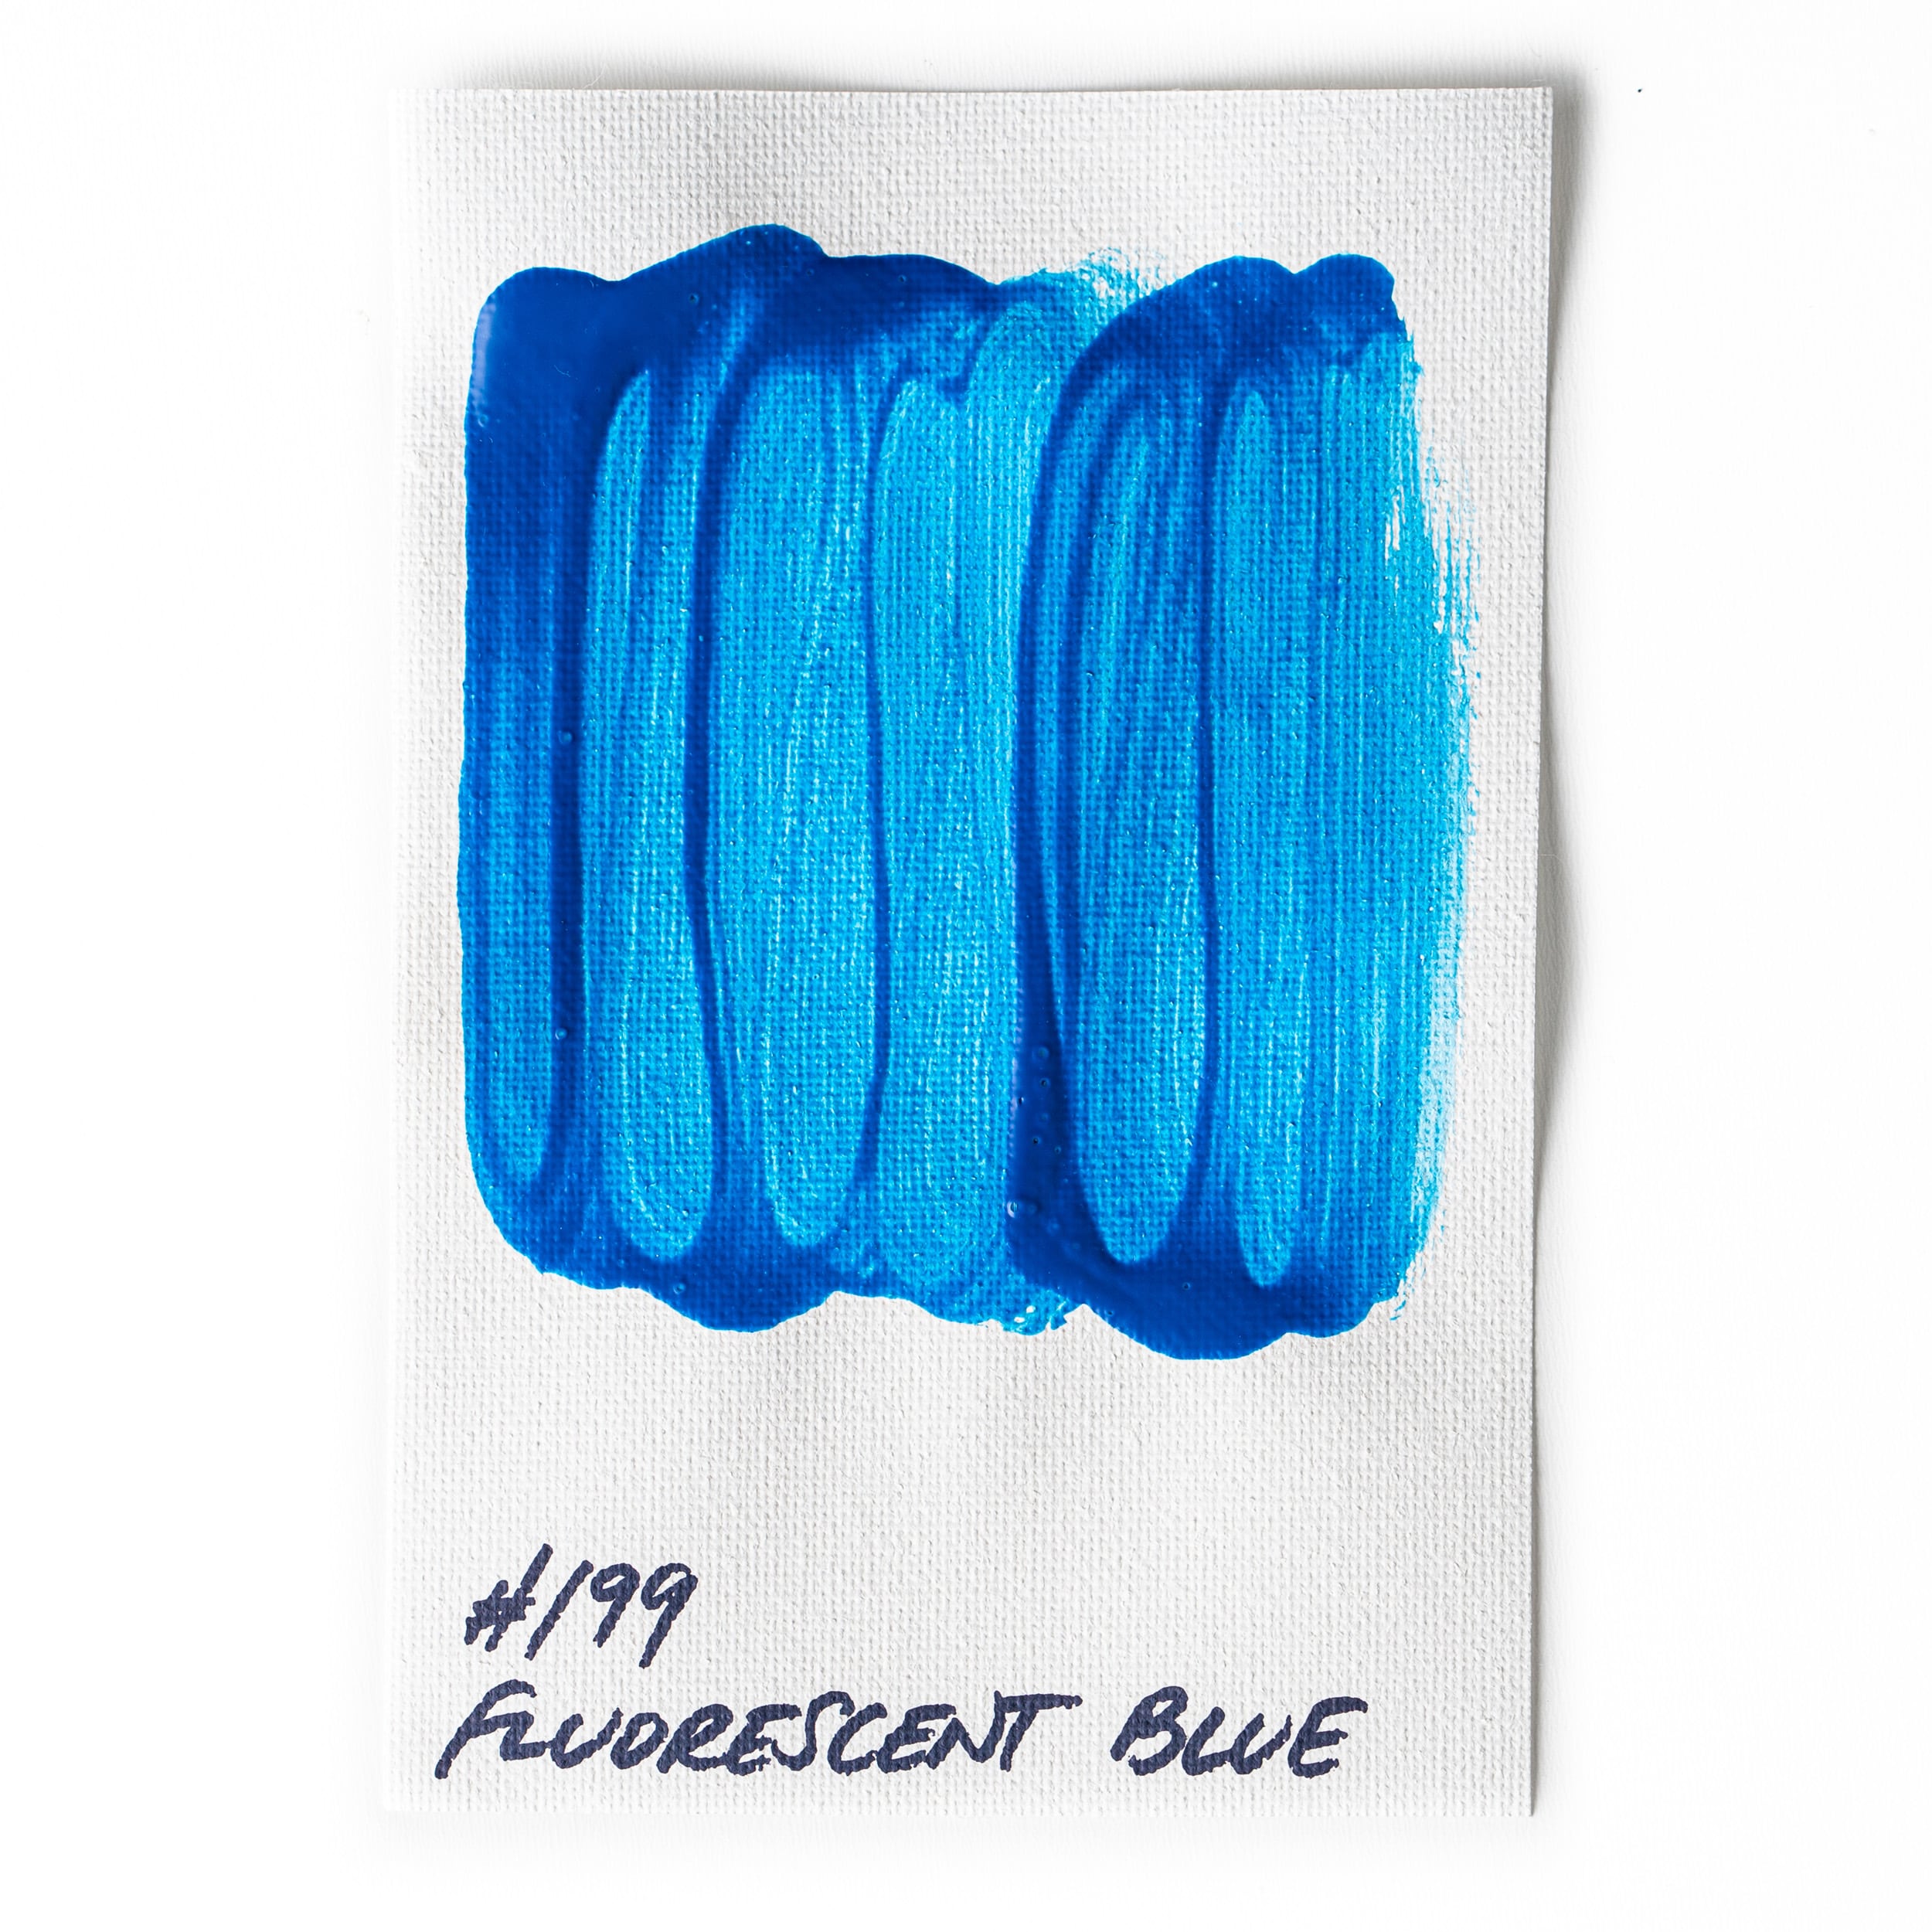 Light Blue Acrylic Paint - 100ml Item No 14910